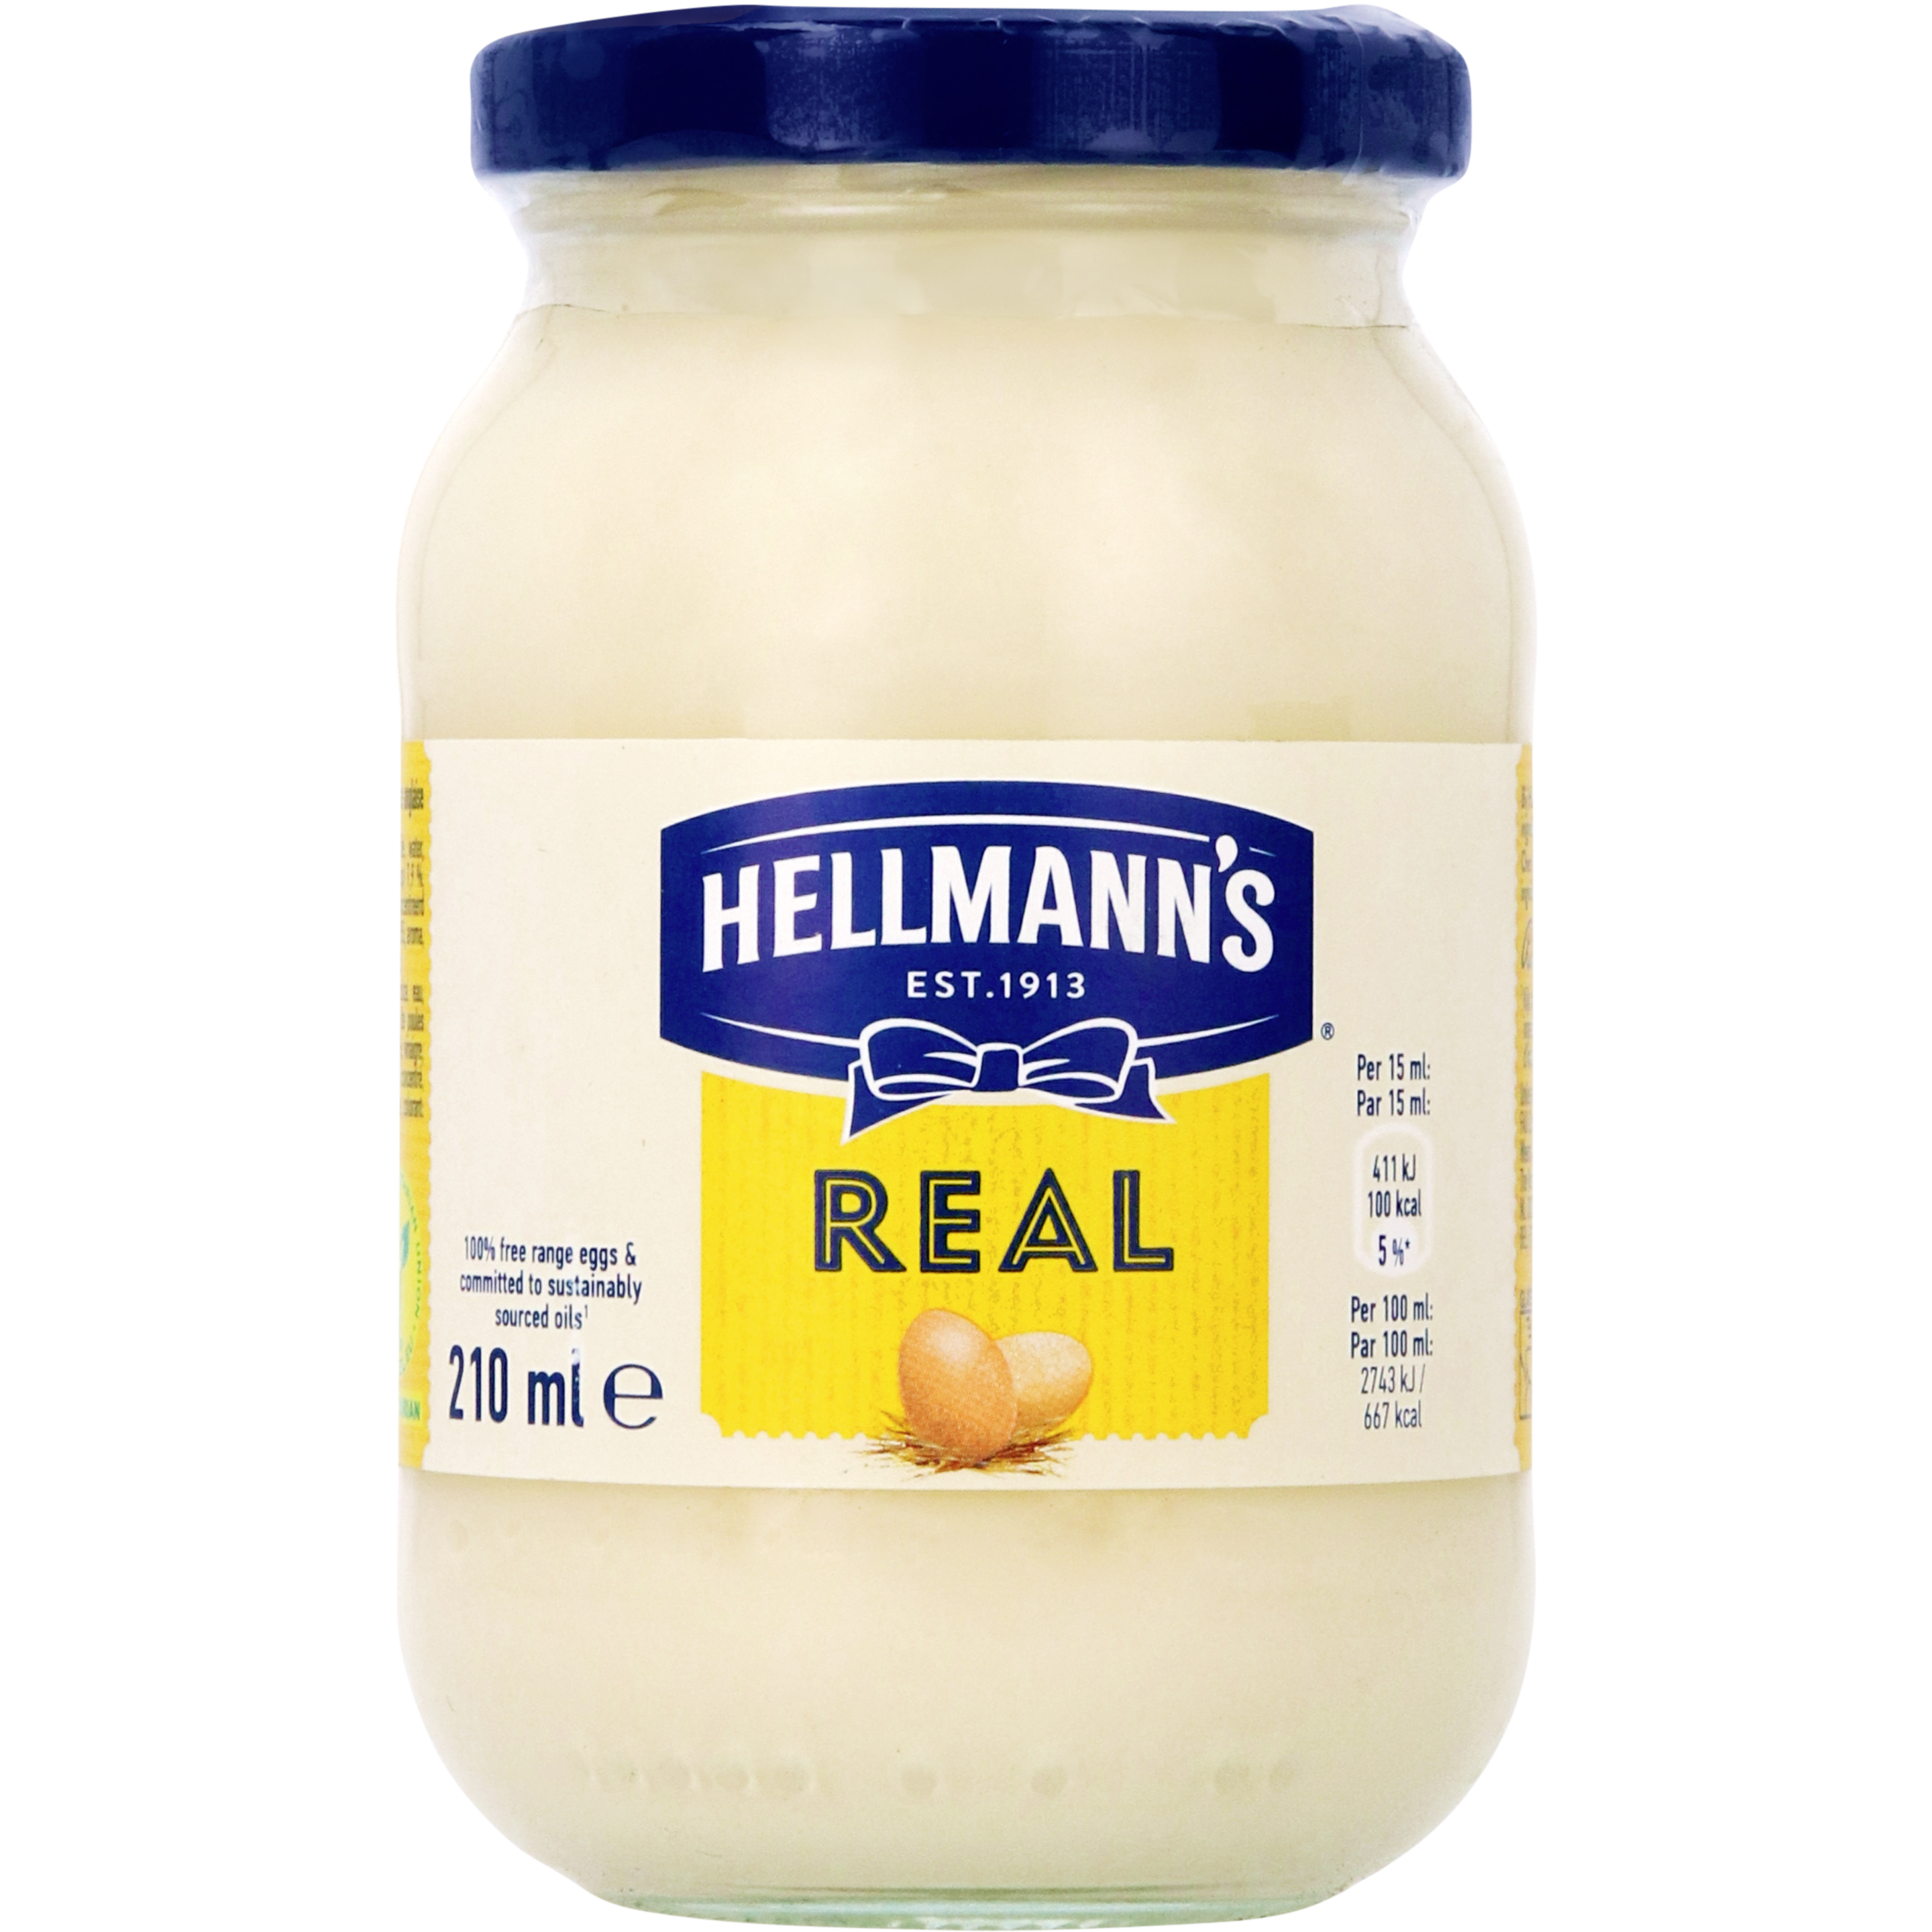 Hellmann's Real (210 ml)